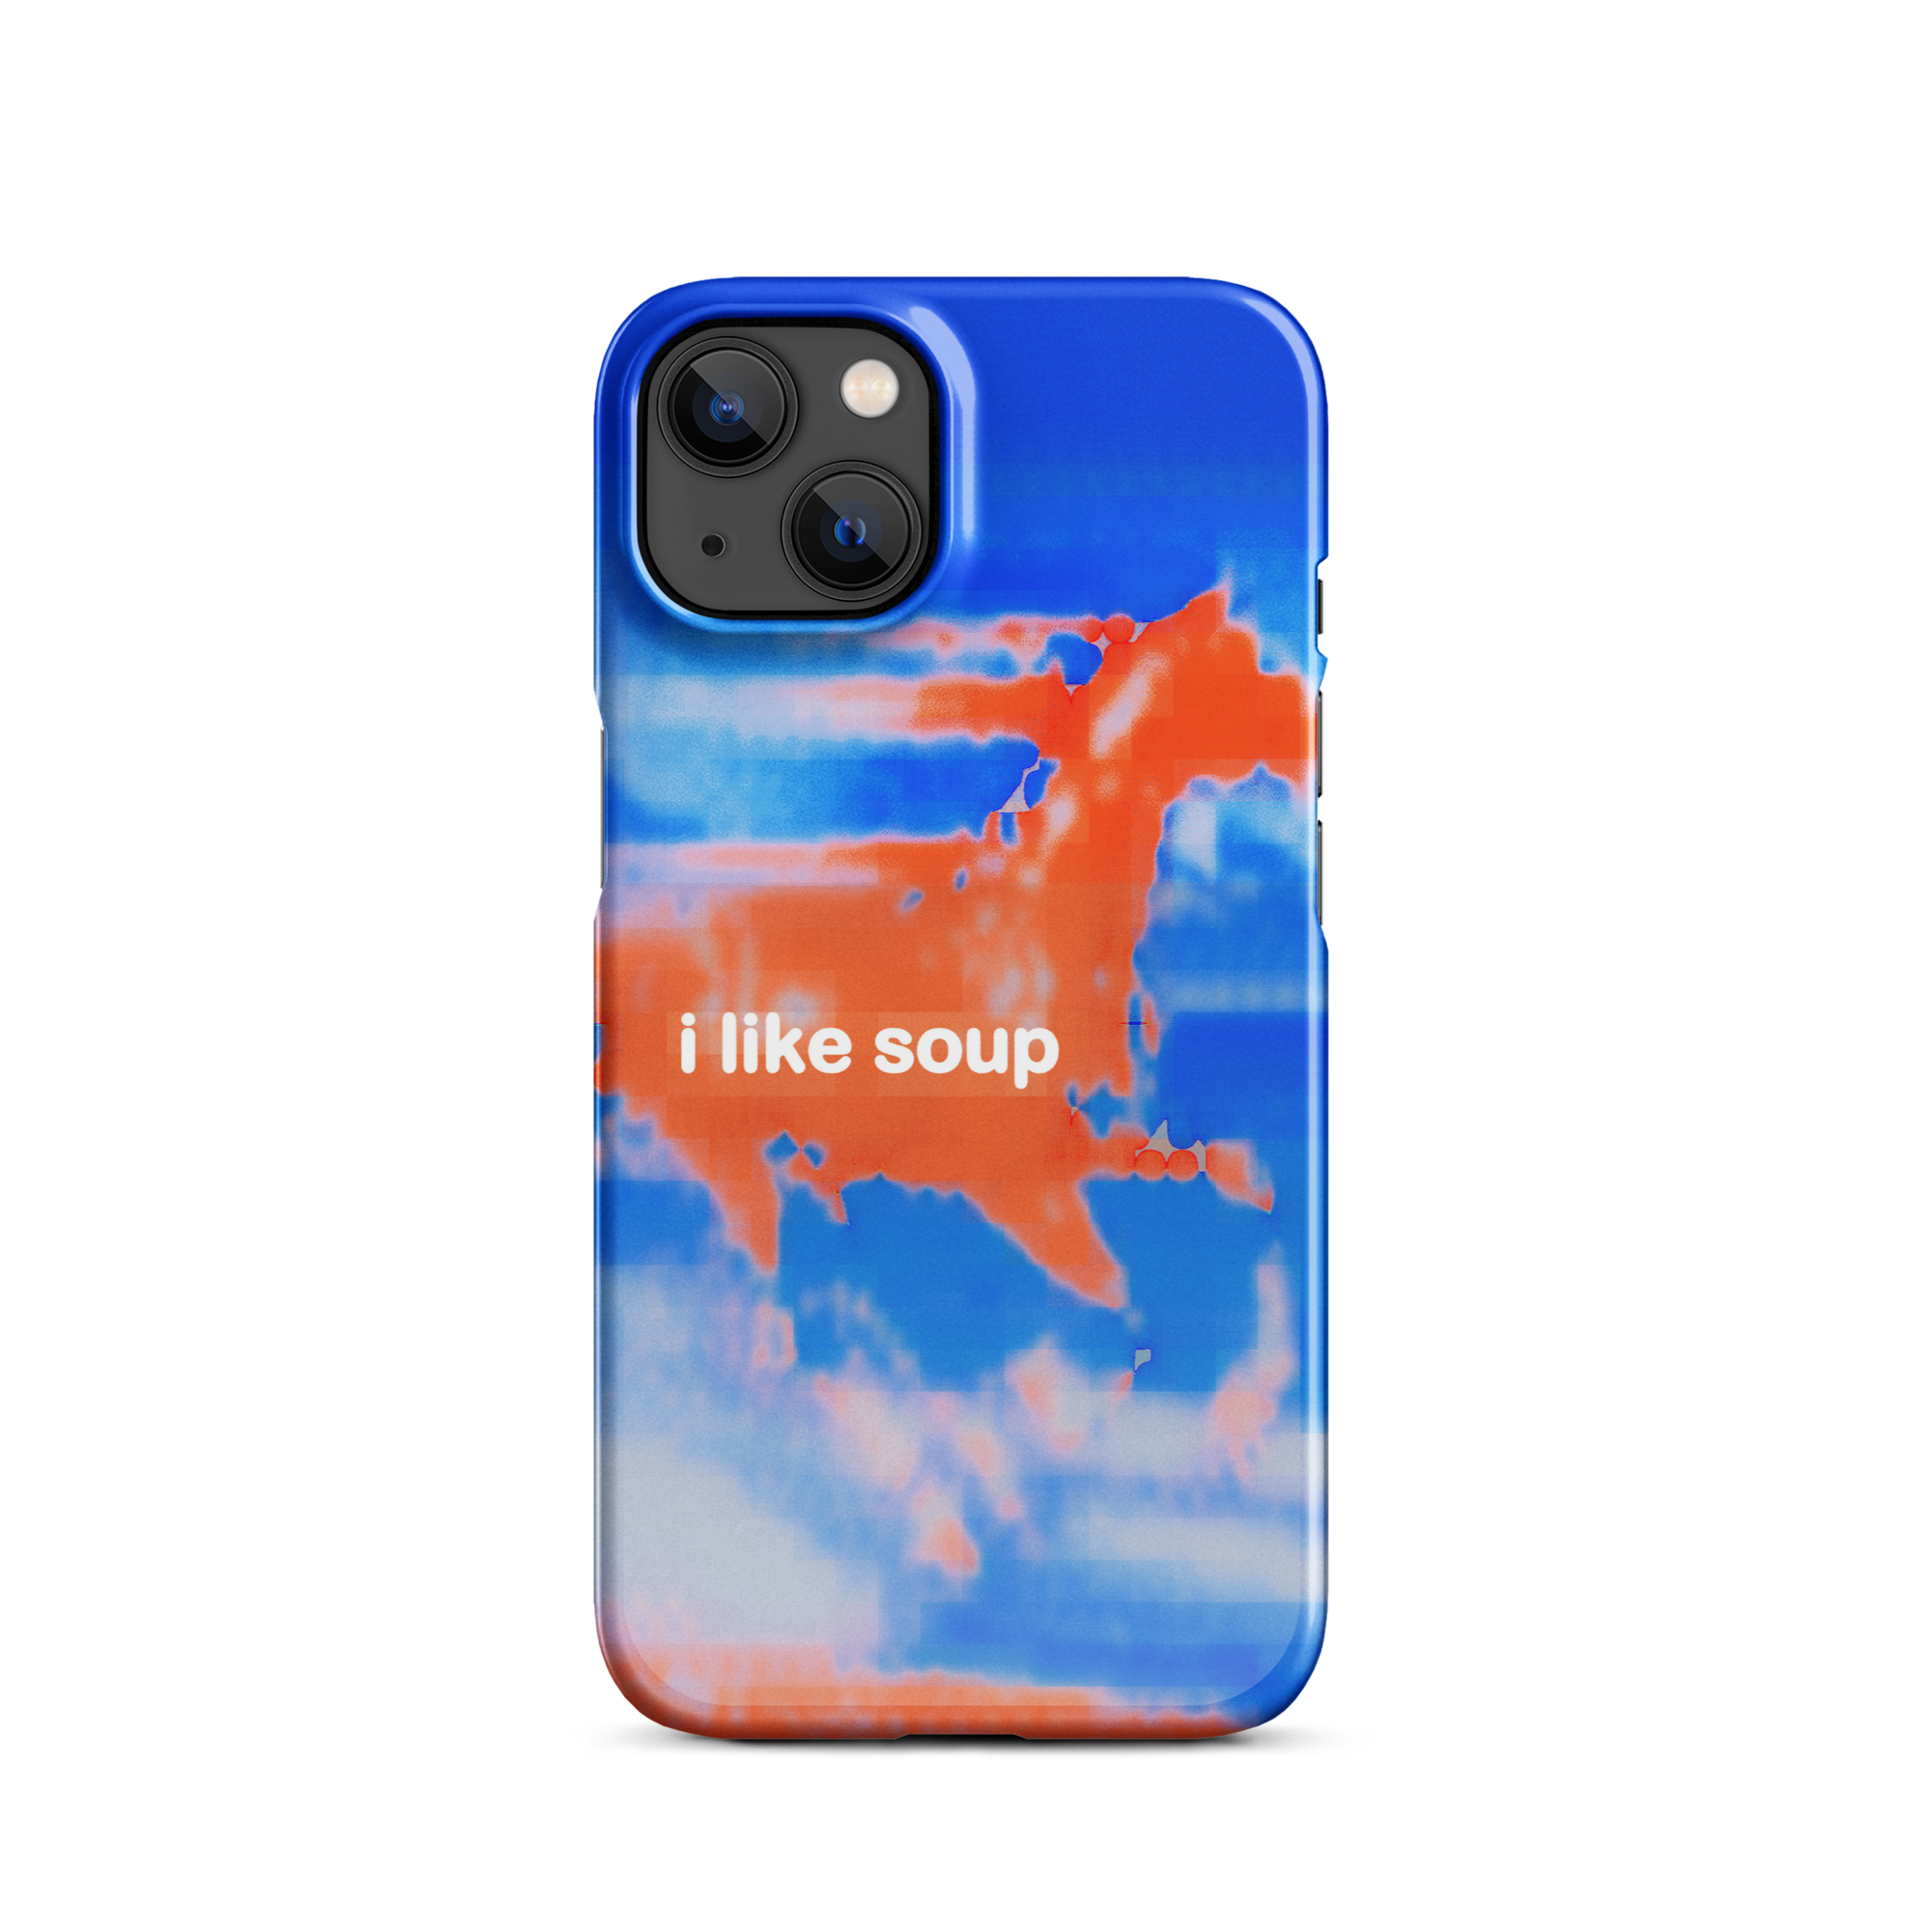 iphone snap case - i like soup